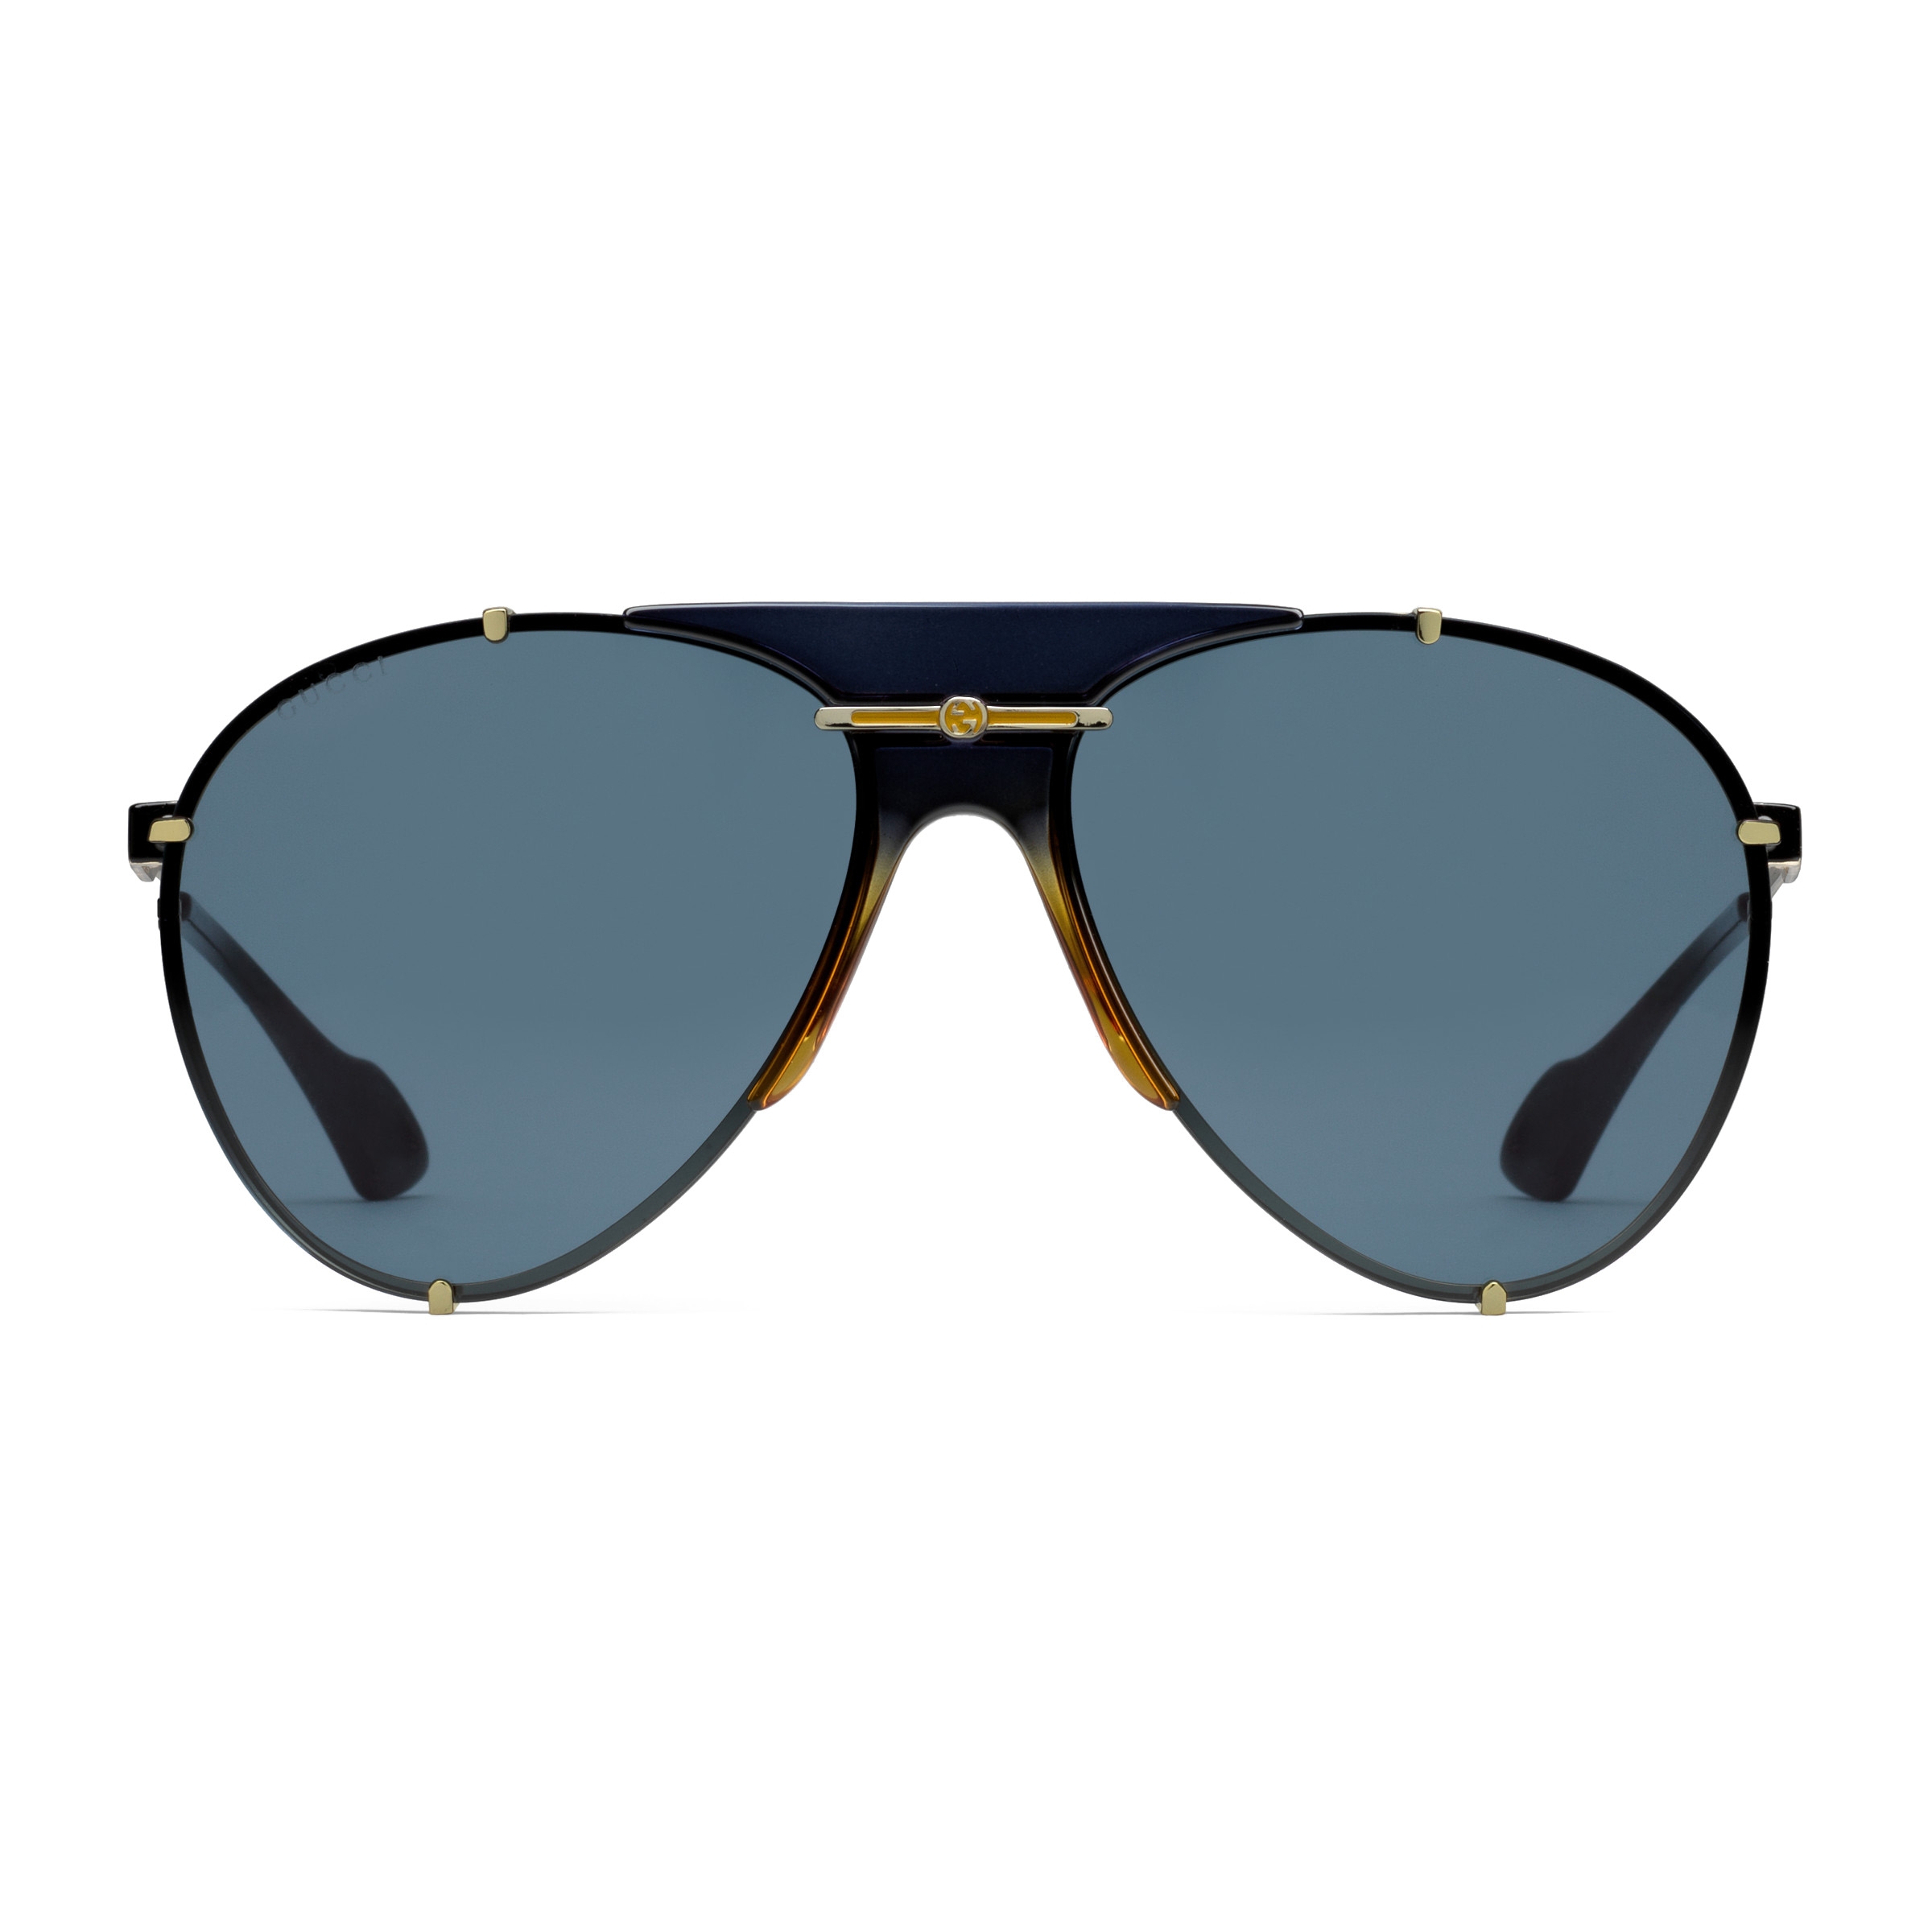 Gucci - Aviator Metal Sunglasses - Gold 